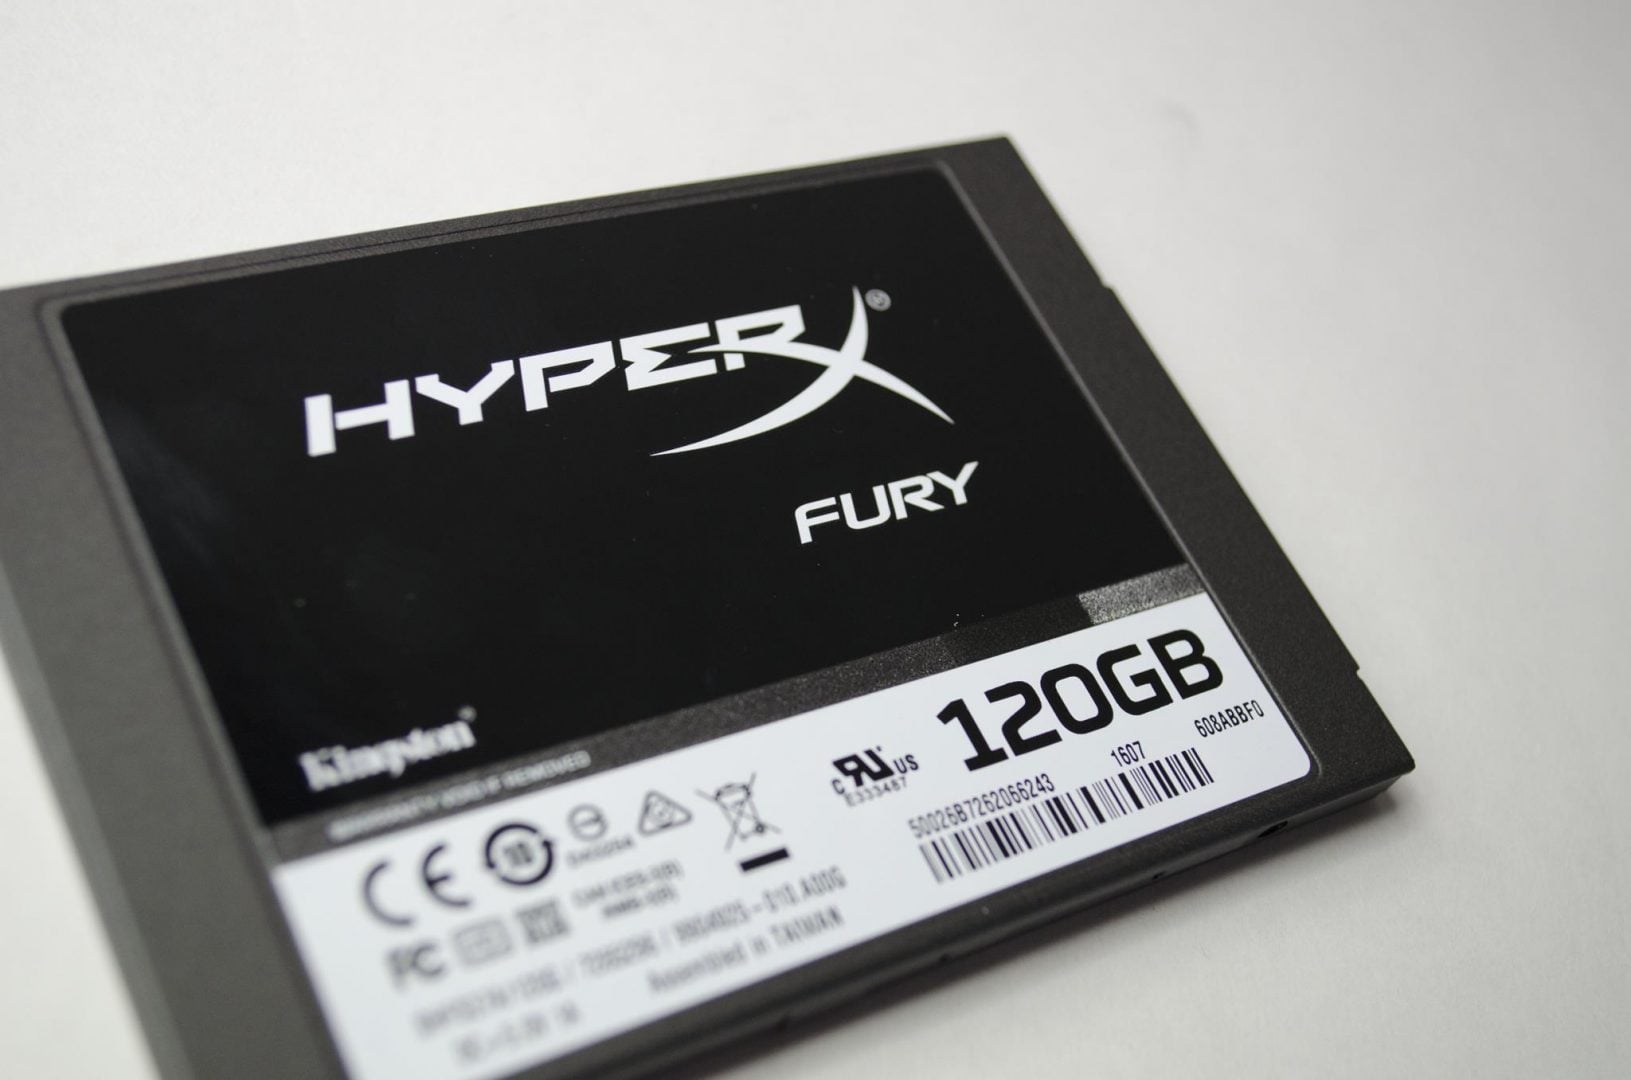 HyperX Fury 120GB SSD Tests - EnosTech.com